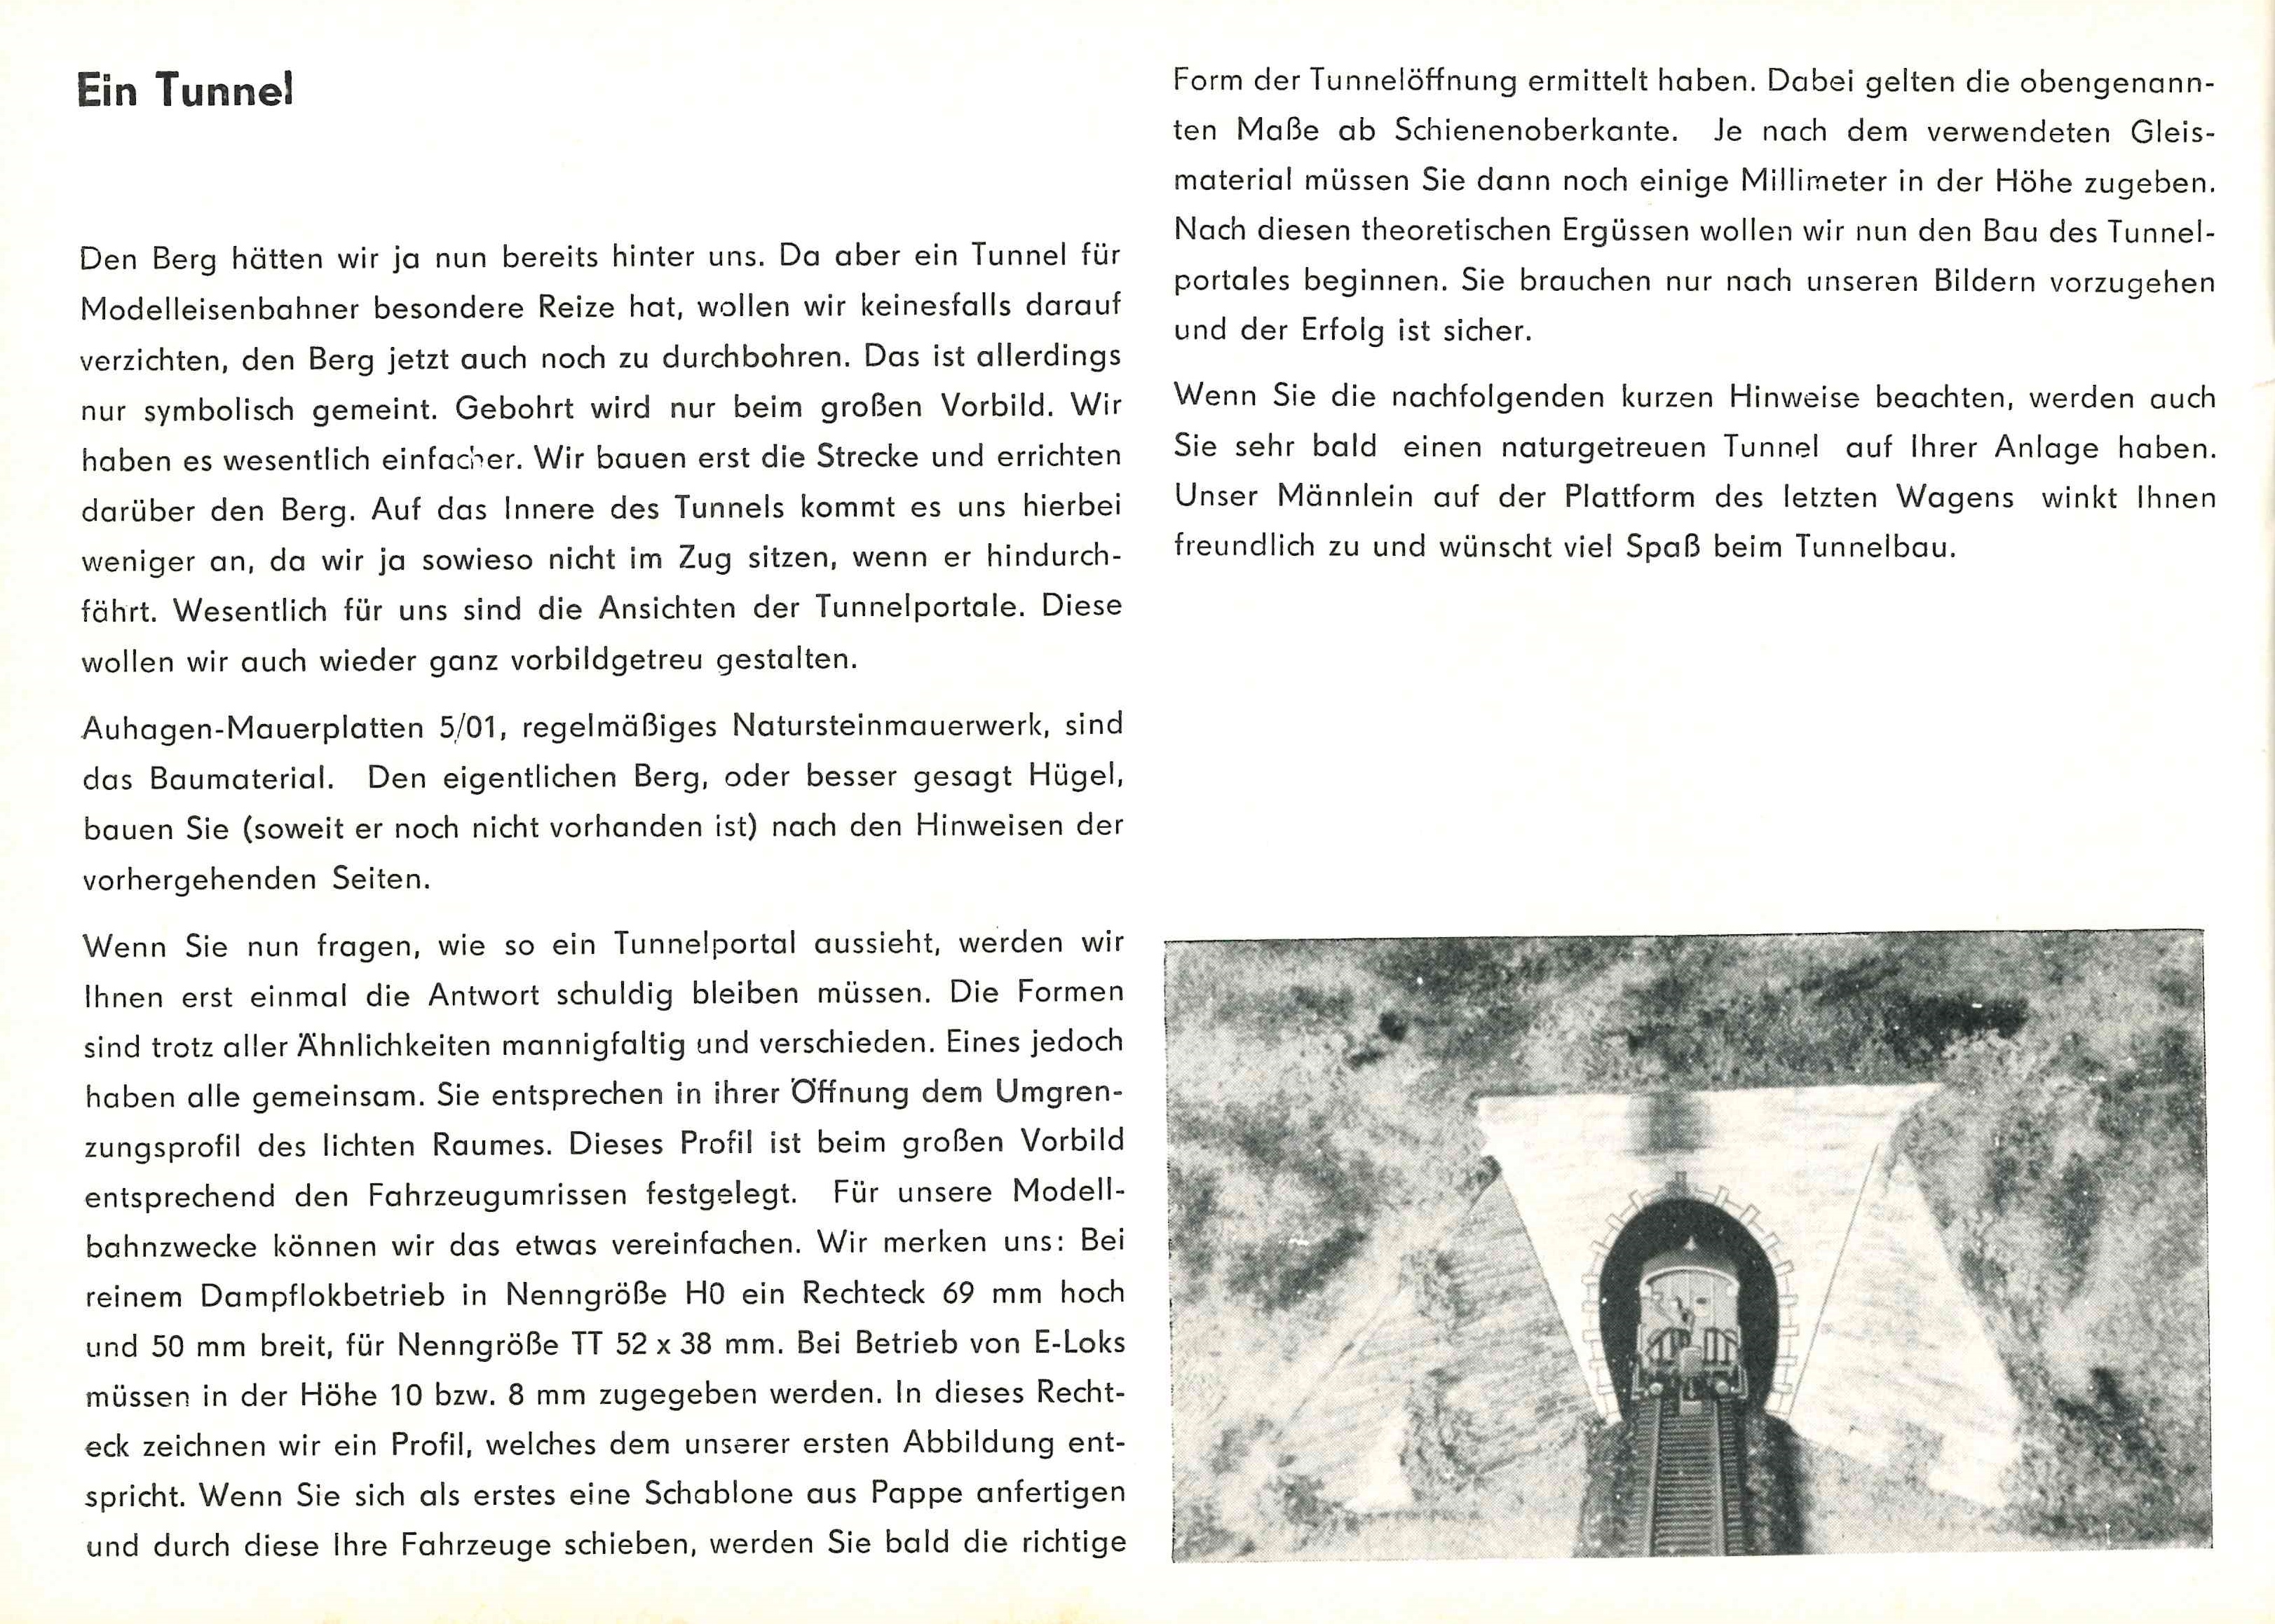 Каталог Auhagen 1970 г., страница 16